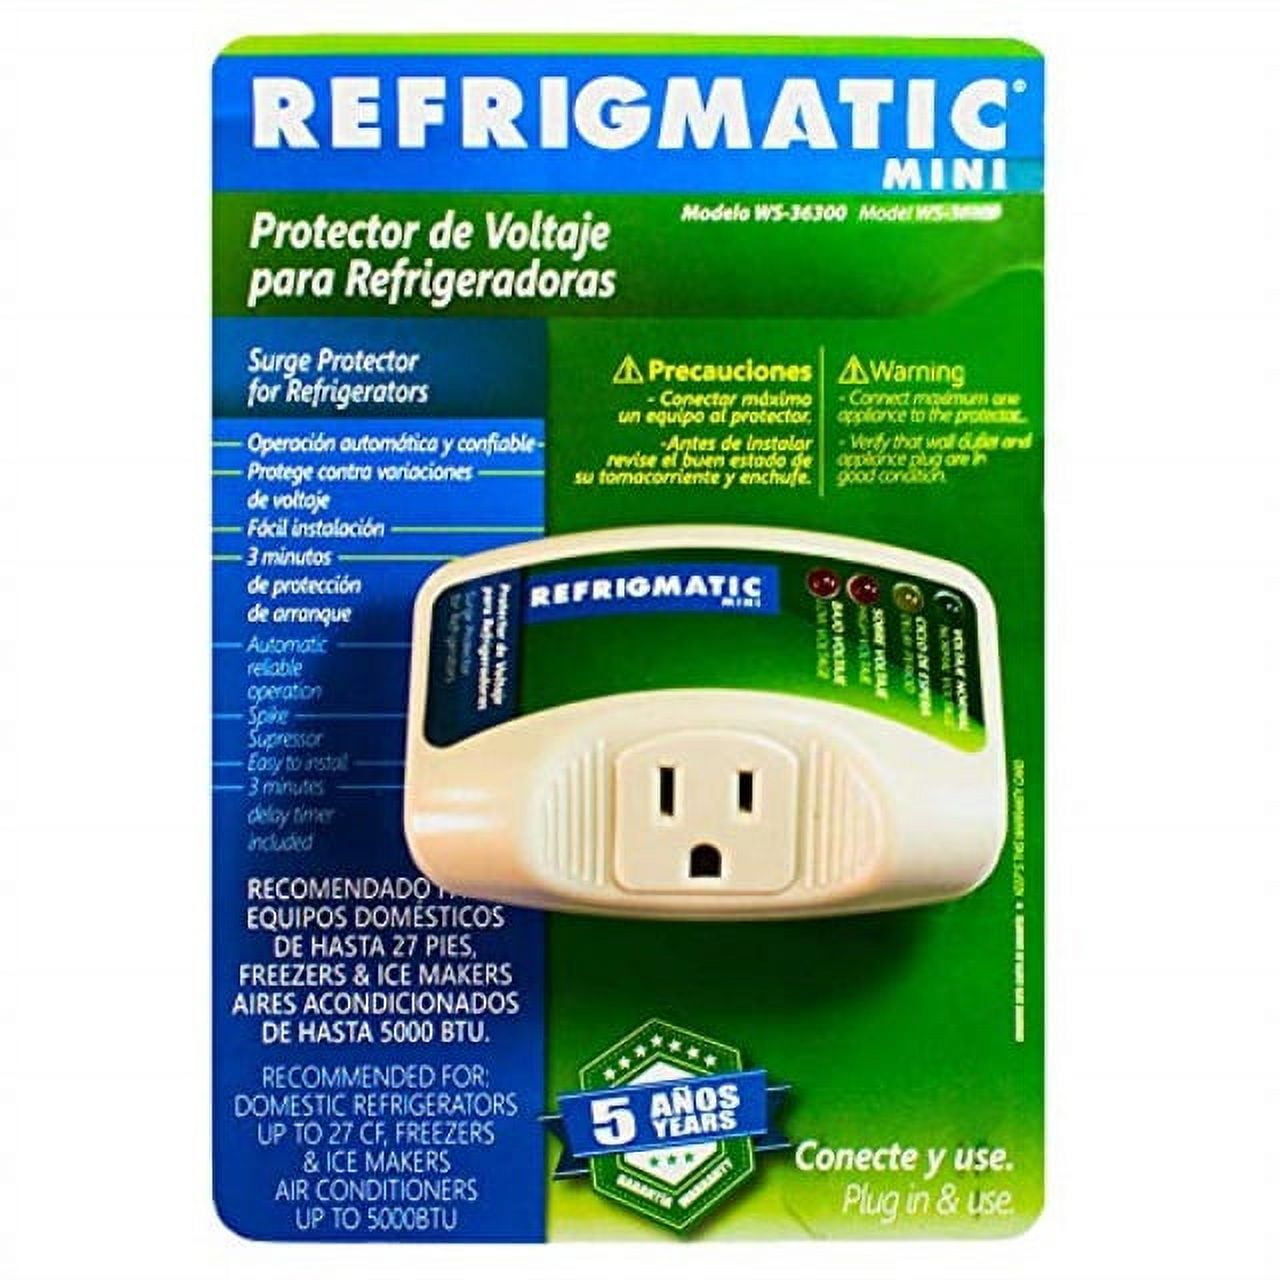 Breakermatic Refrigerator or Freezer Surge / Voltage Protector – Reliable  Appliances & Parts Ltd.